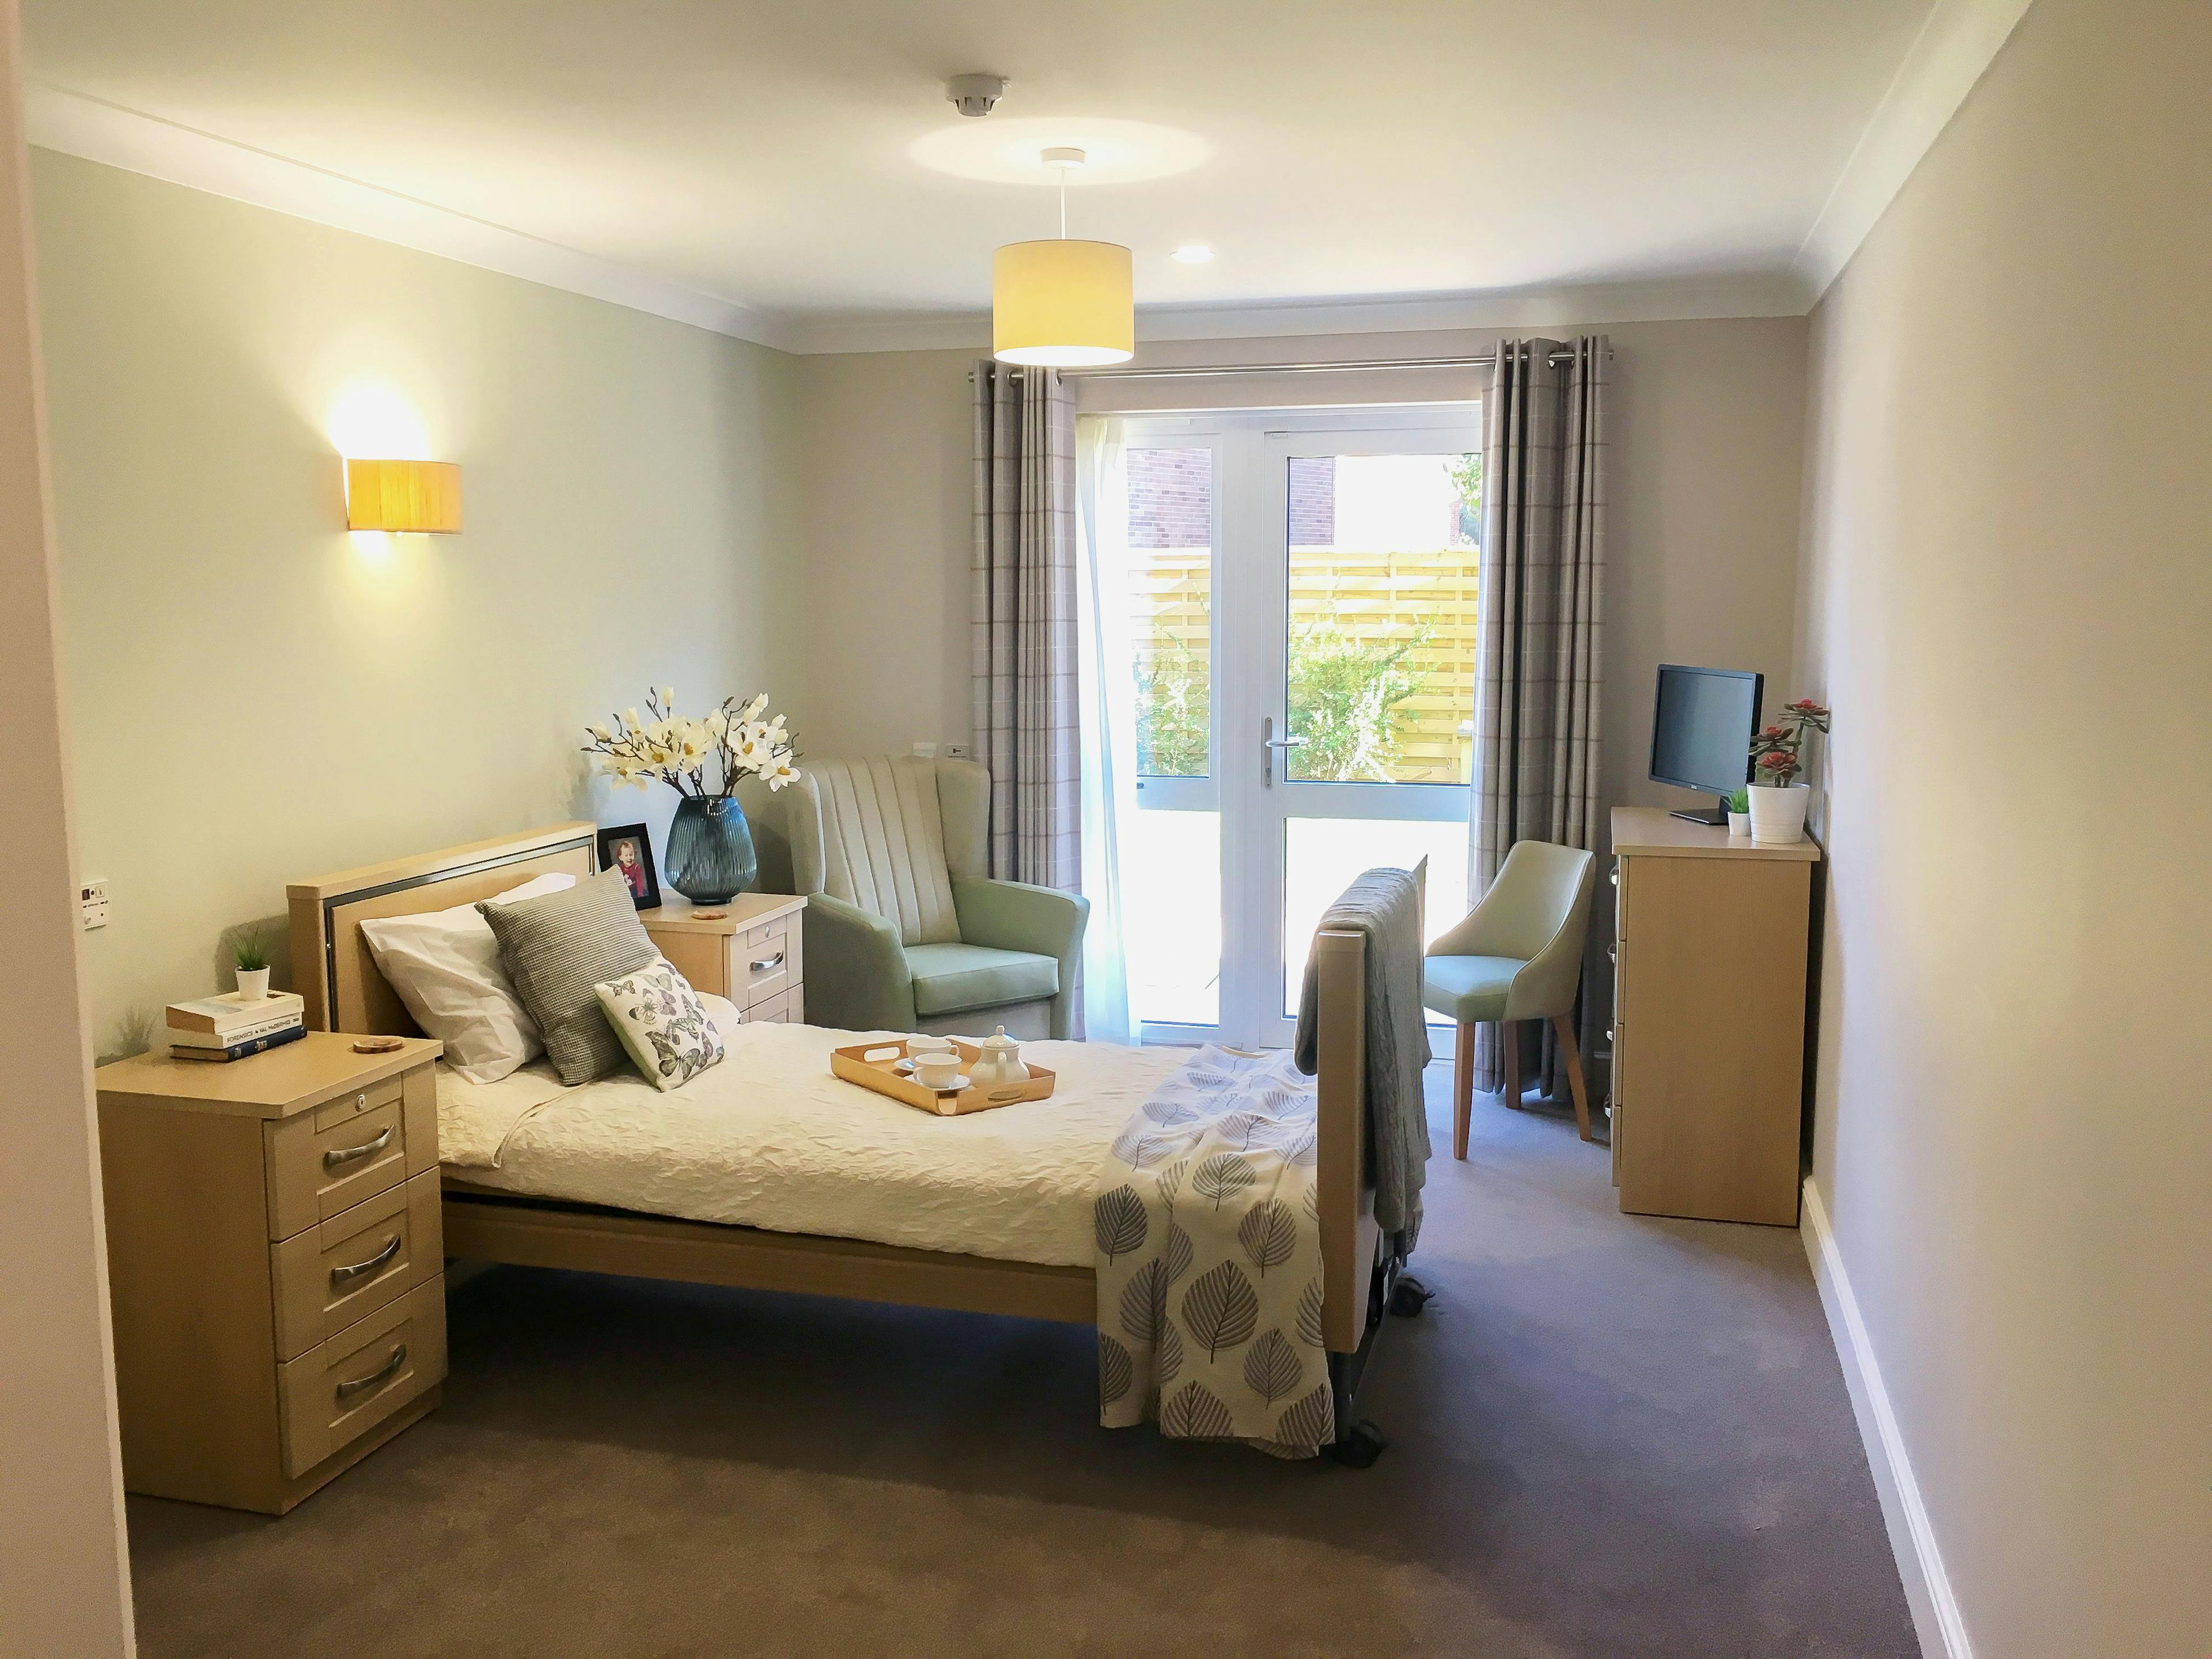 Bedroom of Brabourne care home in Ashford, Kent